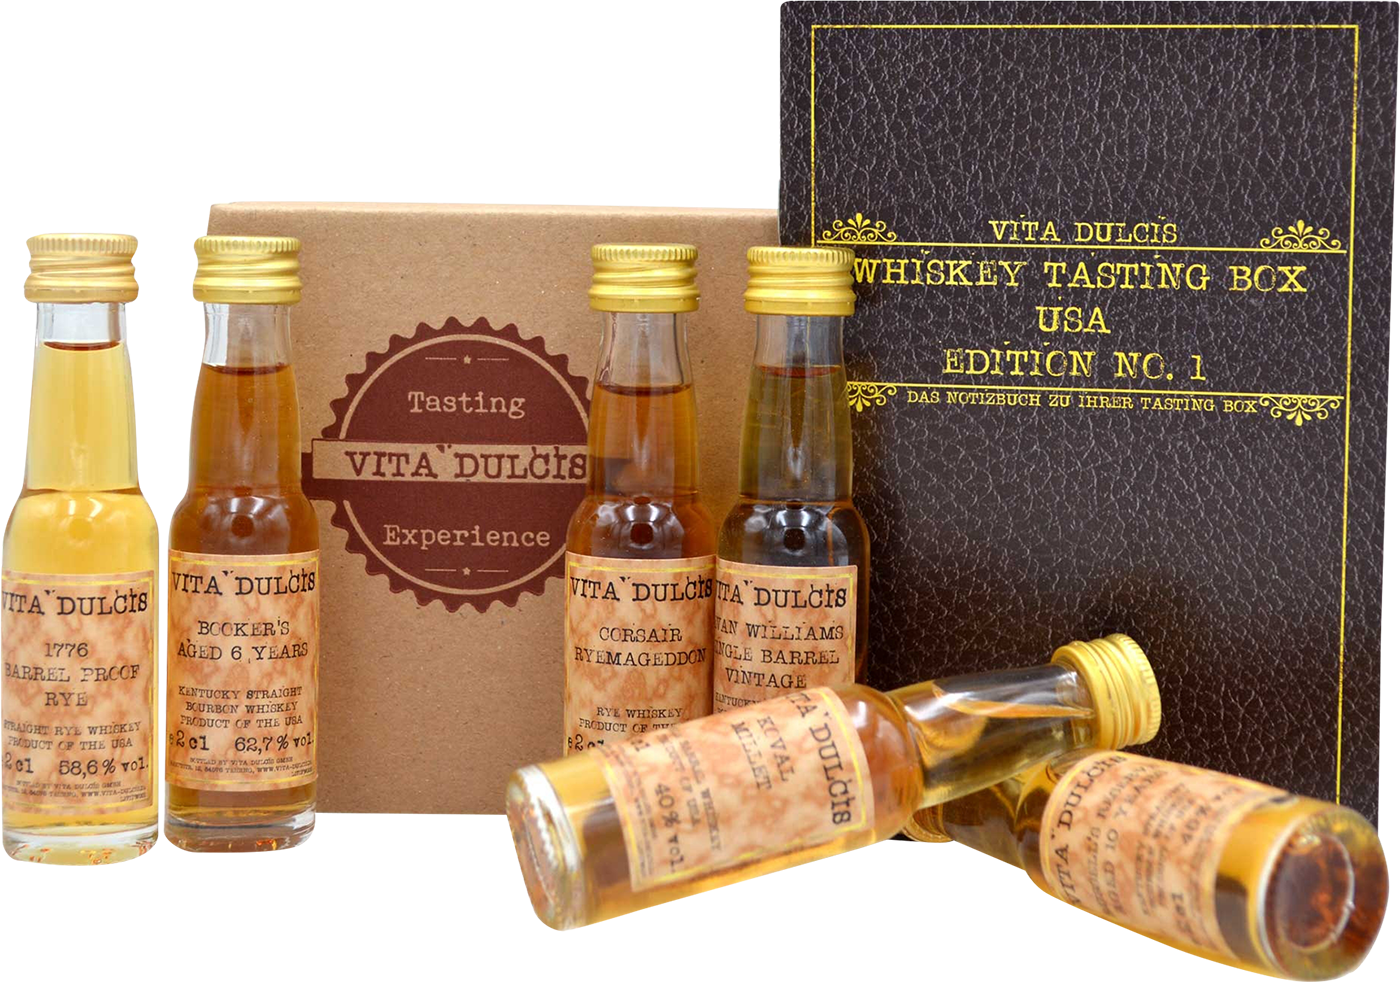 & USA Honest Rare Box Tasting Buy Whisky |